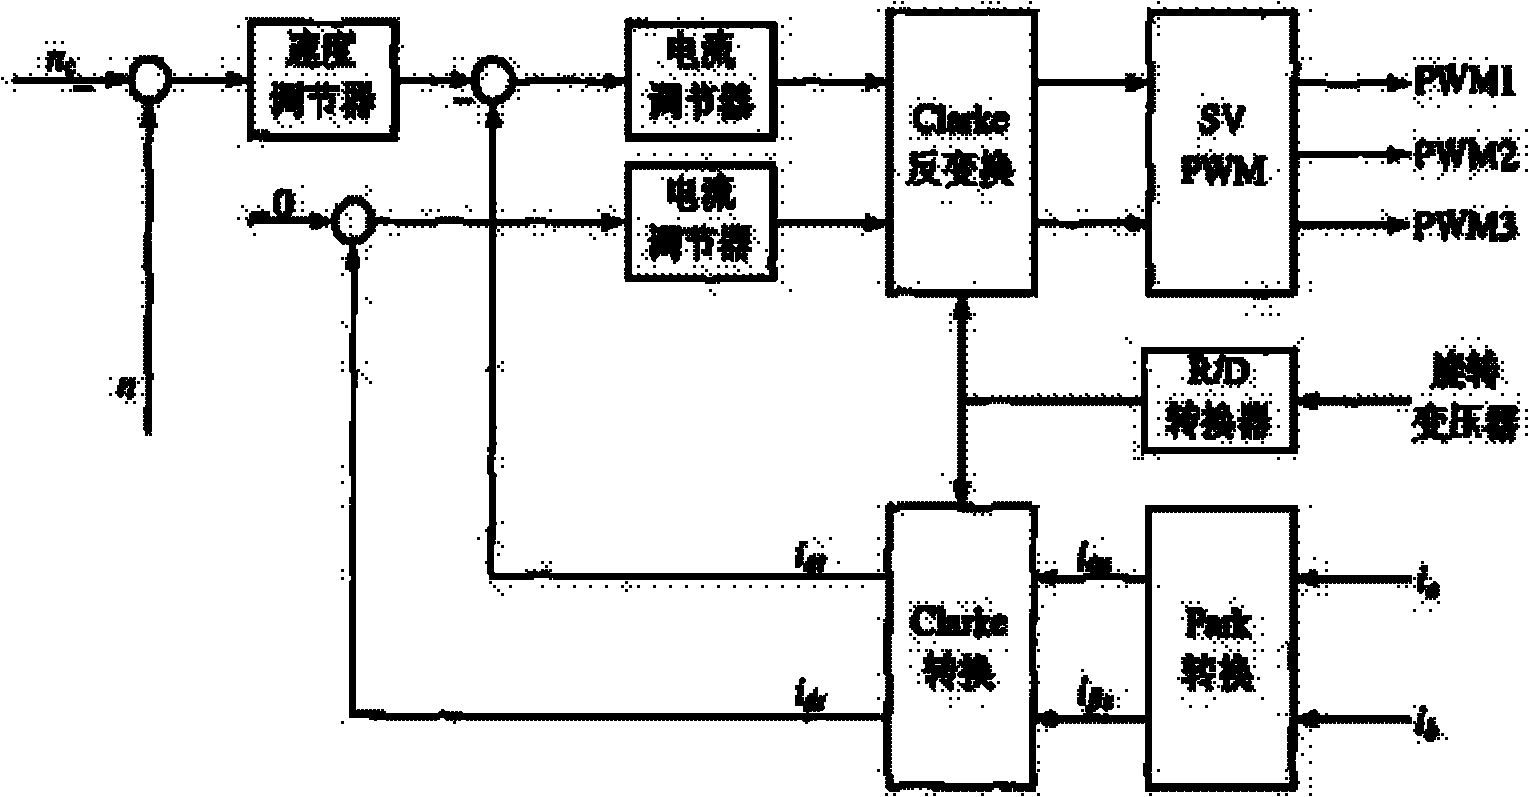 Permanent magnet synchronous motor (PMSM) AC servo system